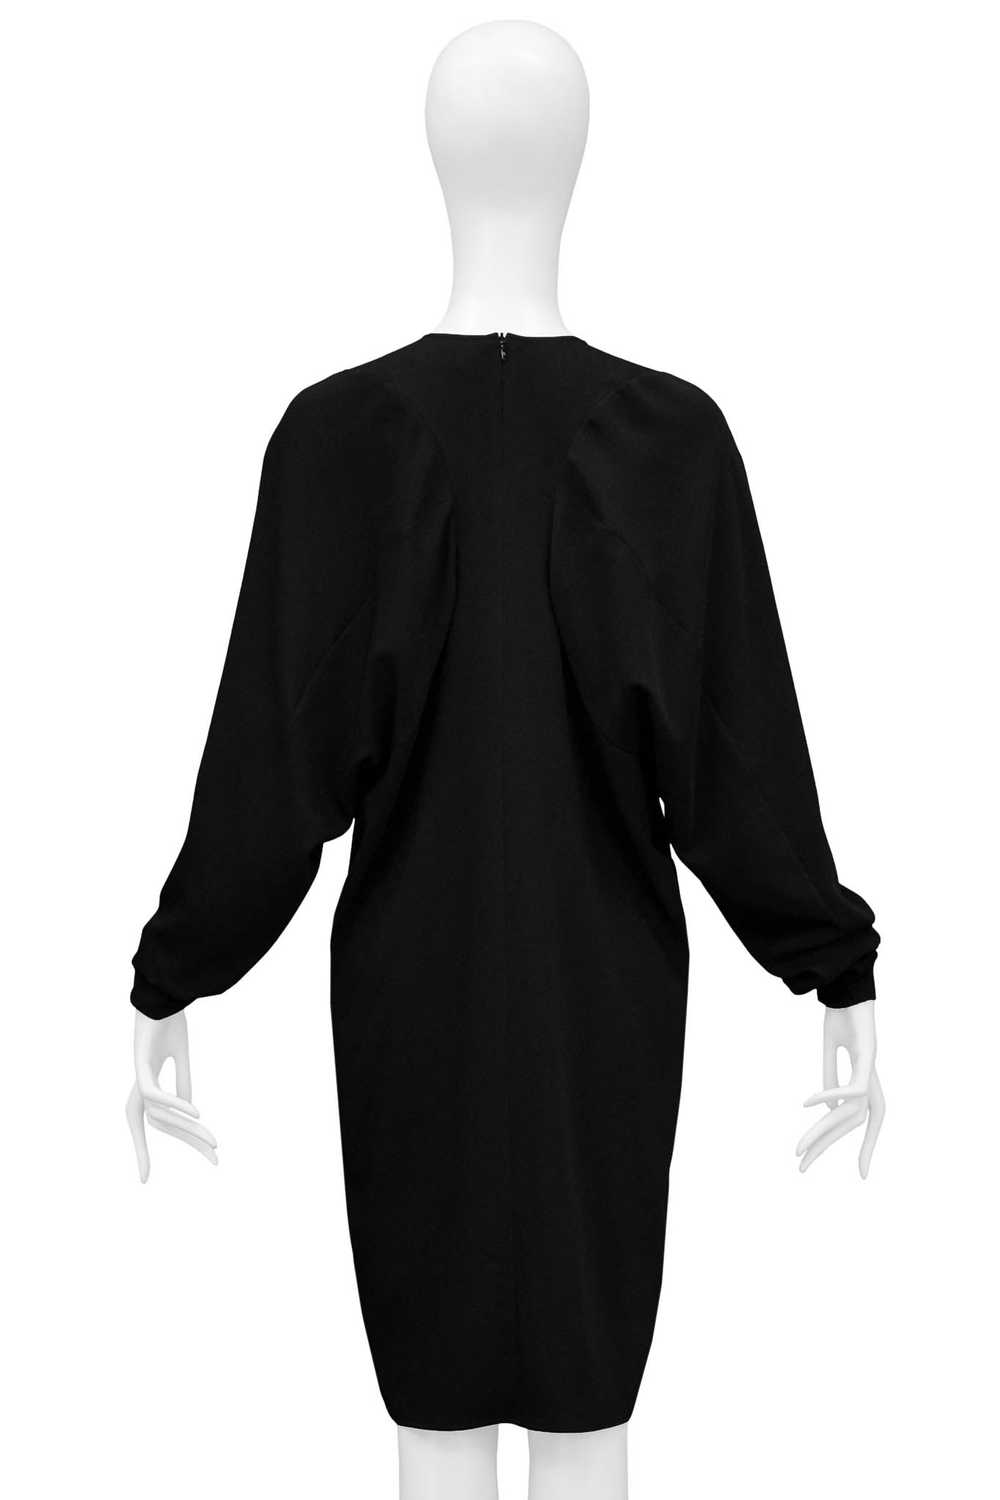 MARGIELA BLACK DRESS WITH LONG DOLMAN SLEEVES - image 2